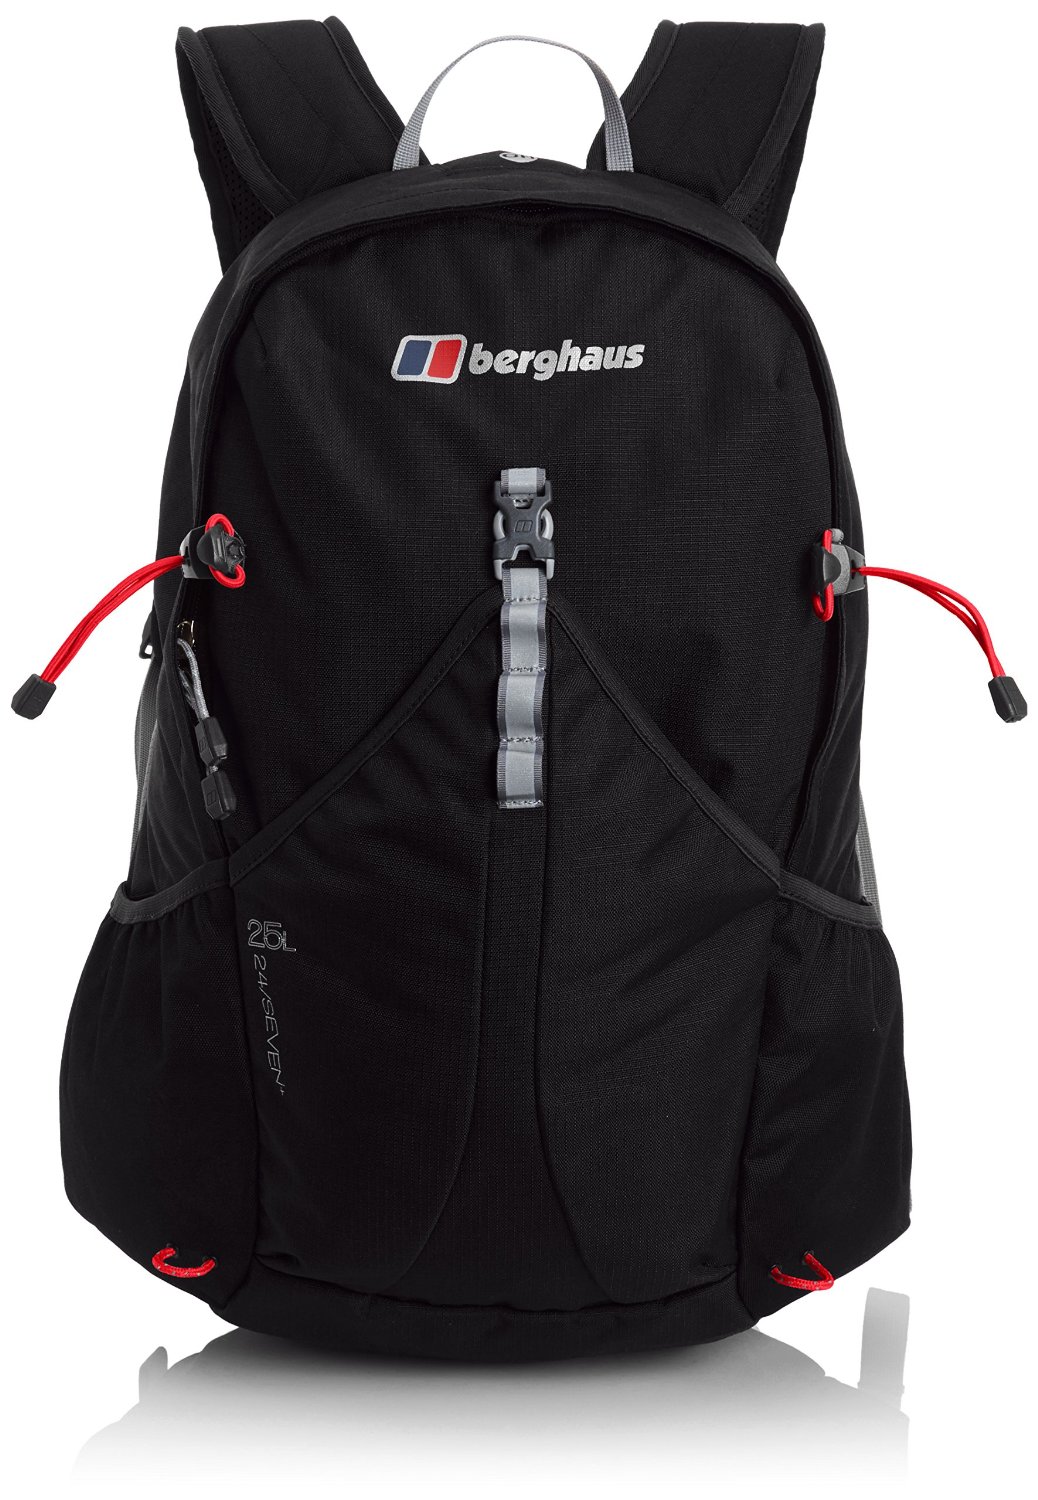 1 best backpack